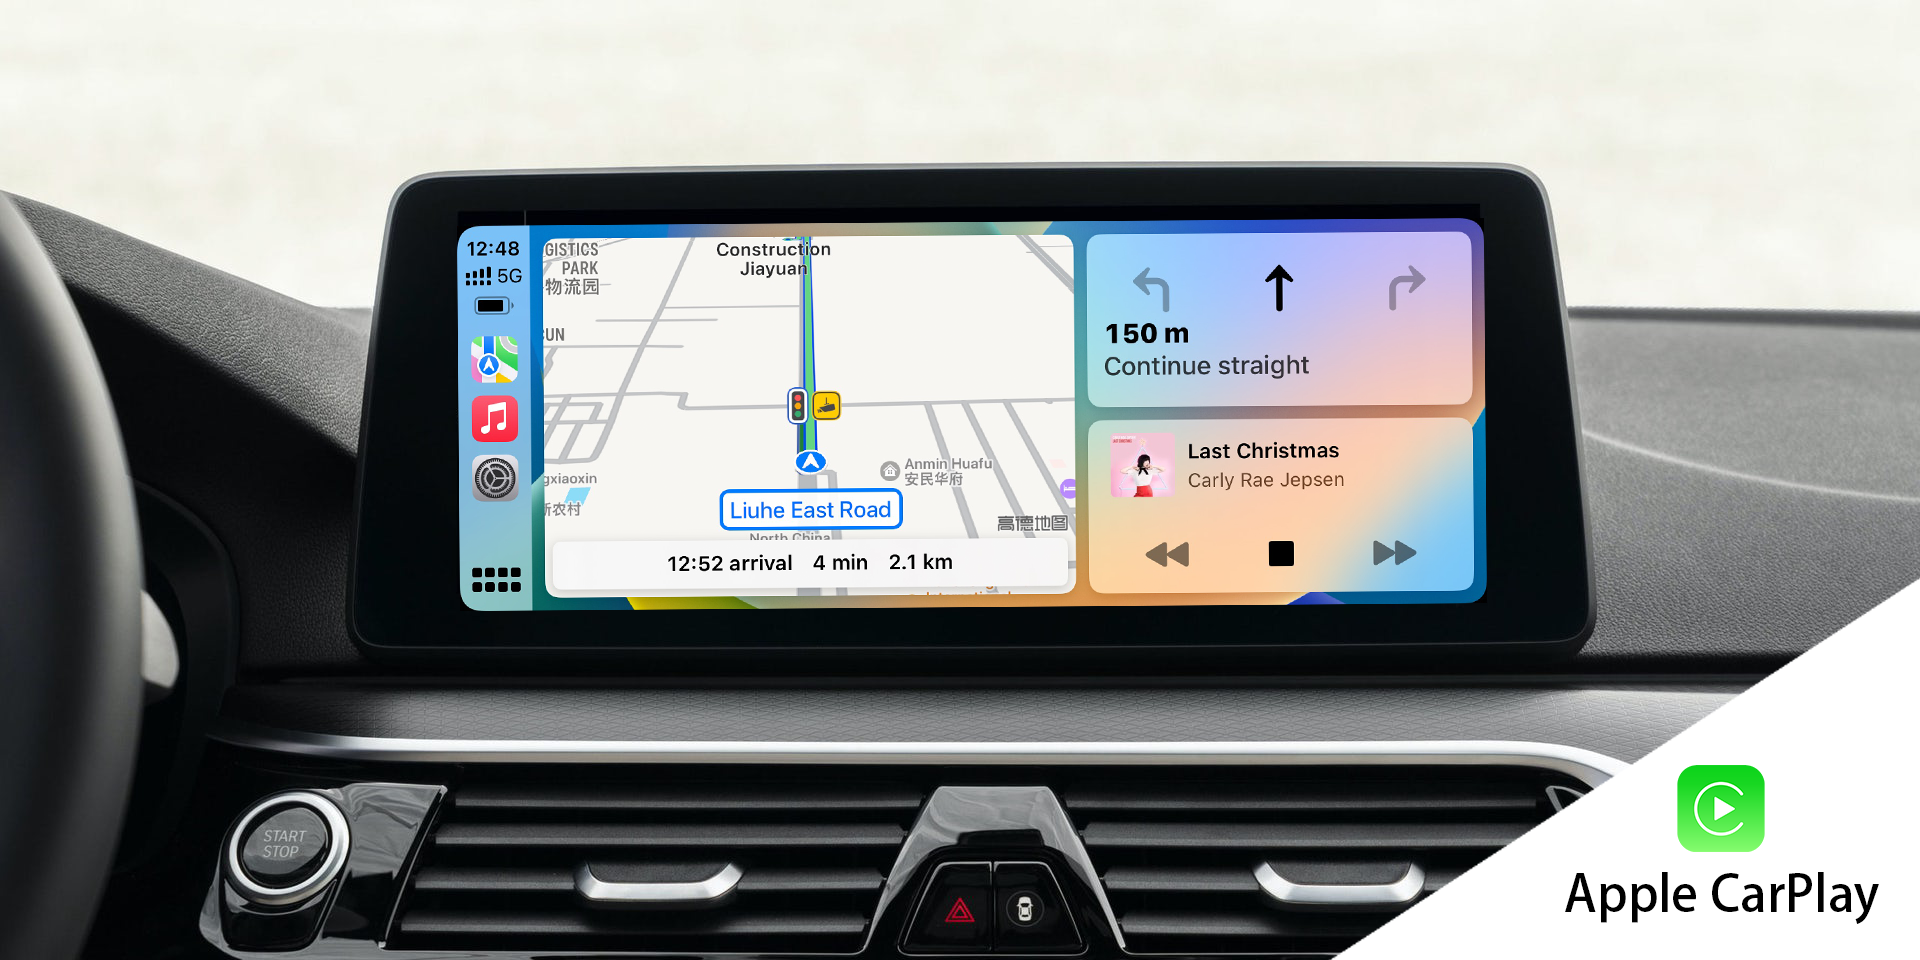 Wired Apple CarPlay upgrade to Wireless Adapter -- U2Air Pro – WAKAA